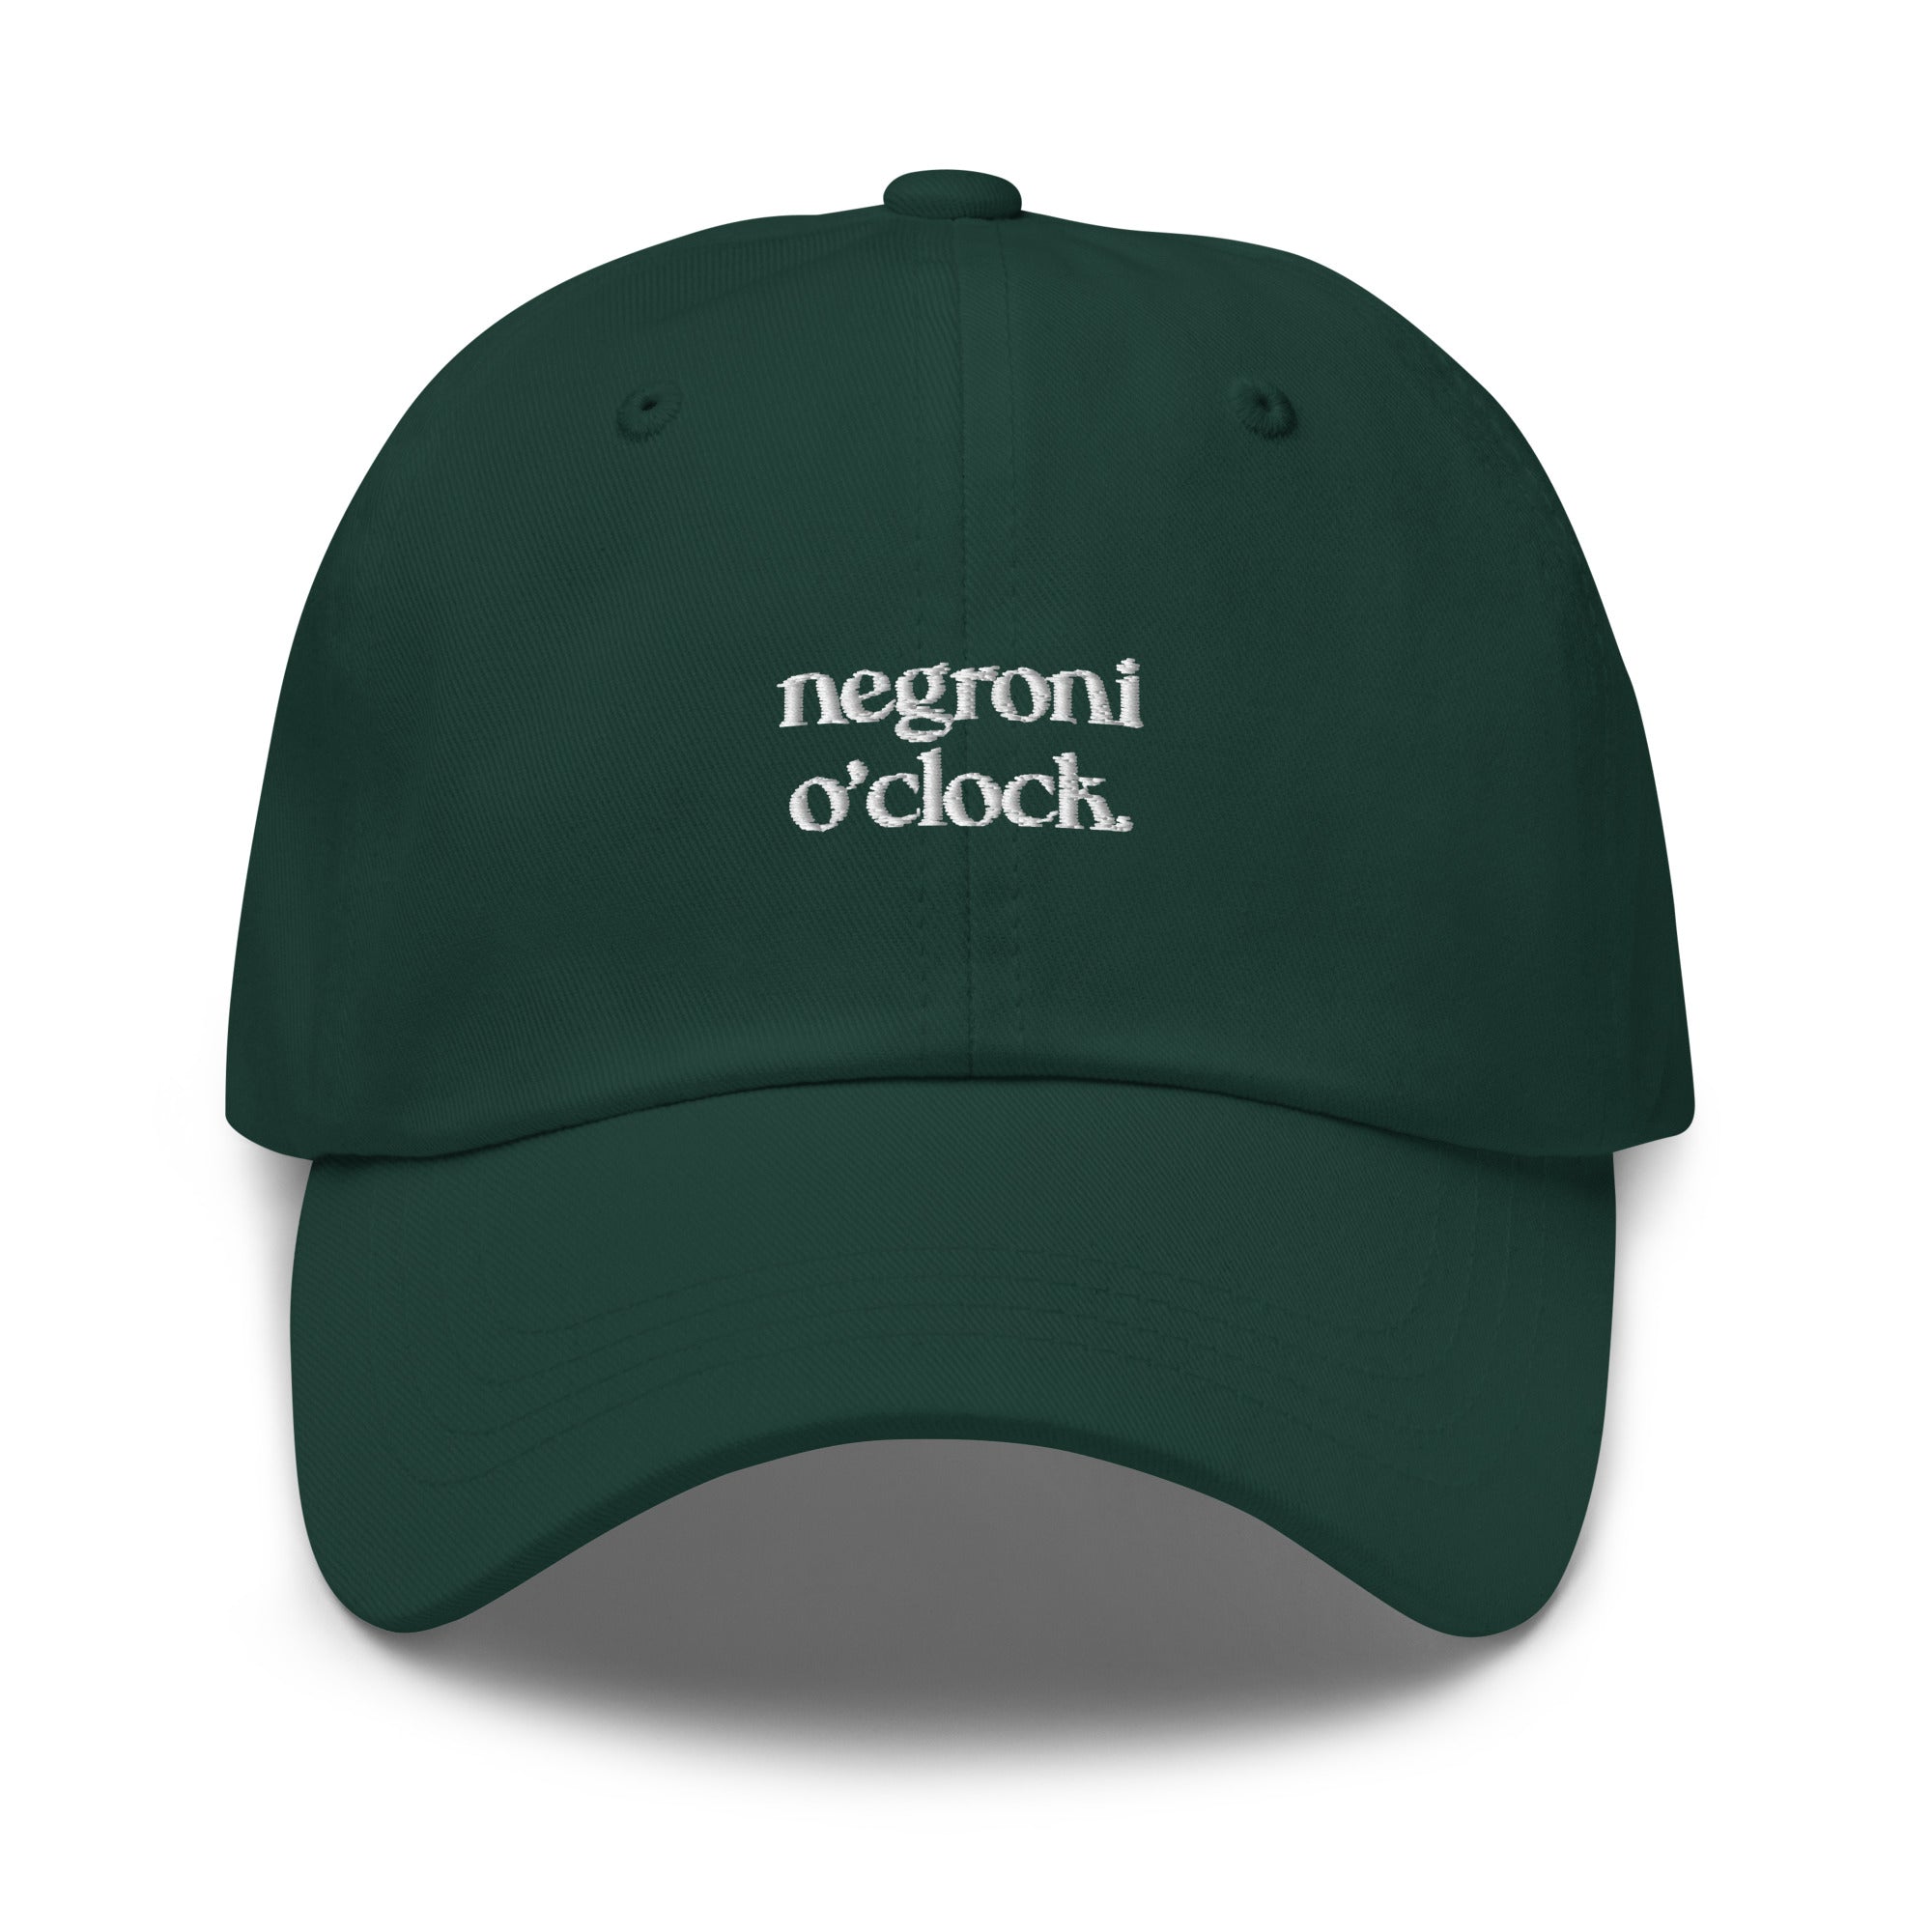 Negroni O'clock - Dad hat